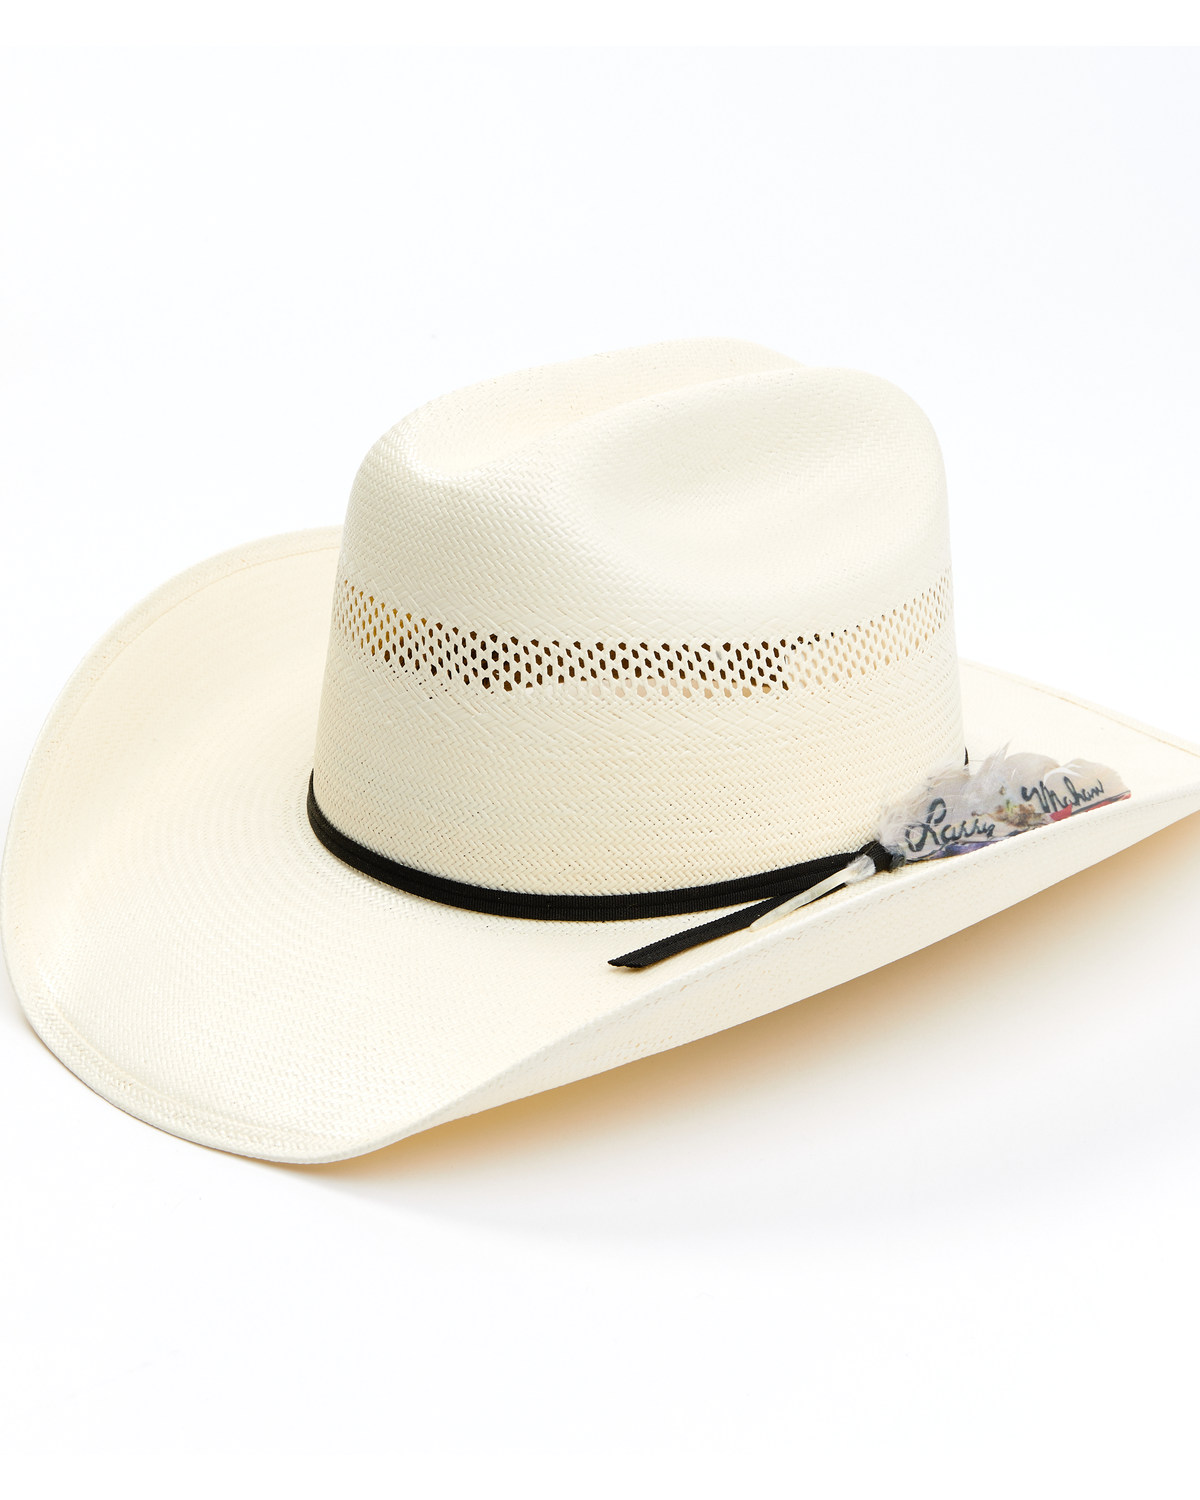 Larry Mahan 10X Straw Cowboy Hat